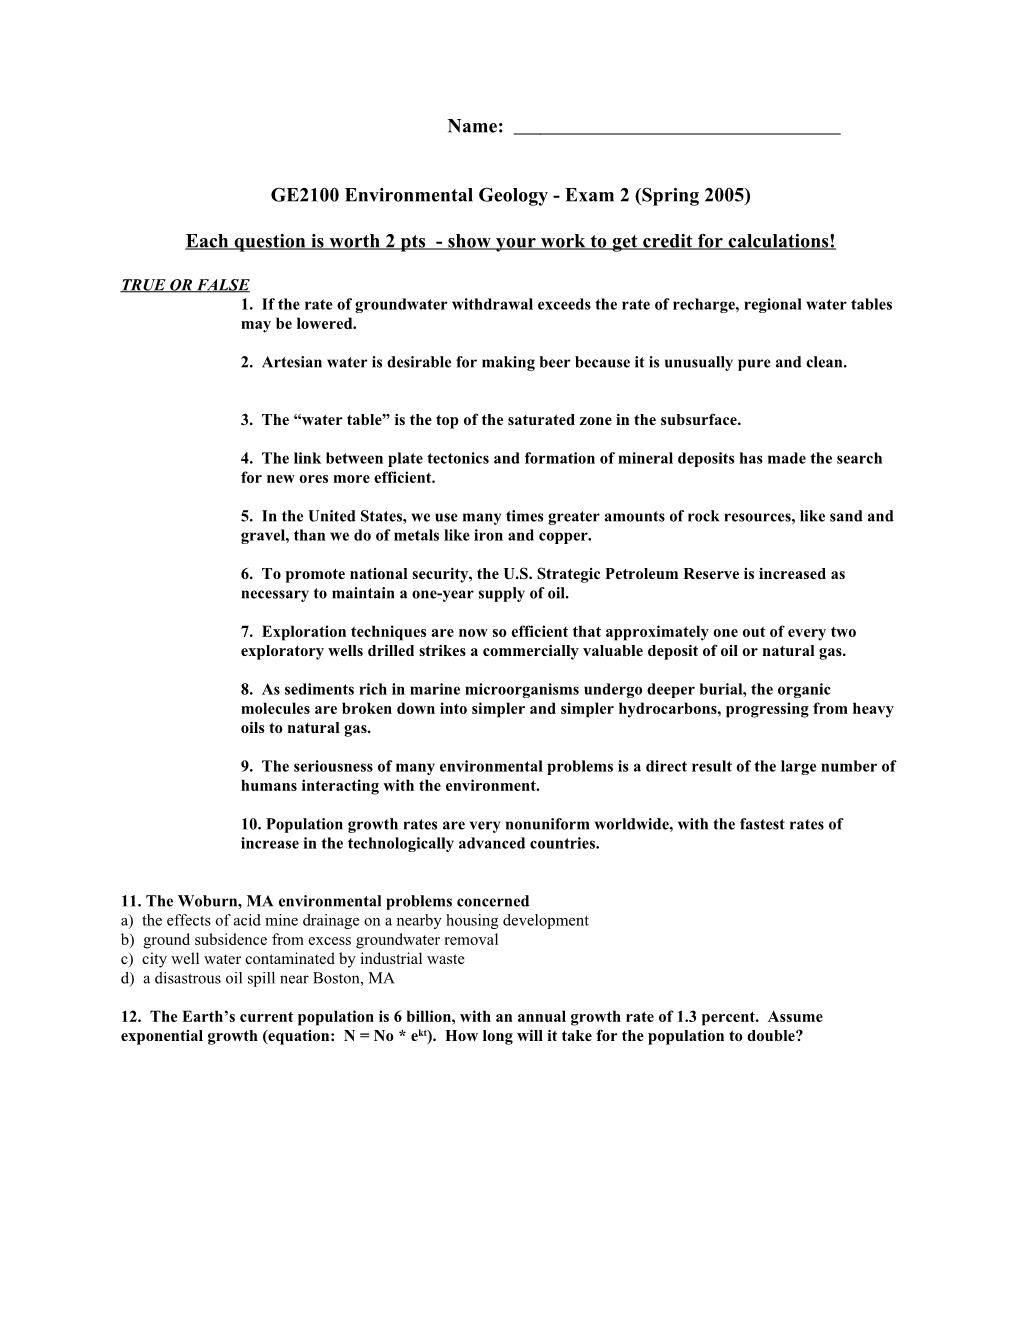 GE2100 Environmental Geology - Exam 2 (Spring 2005)